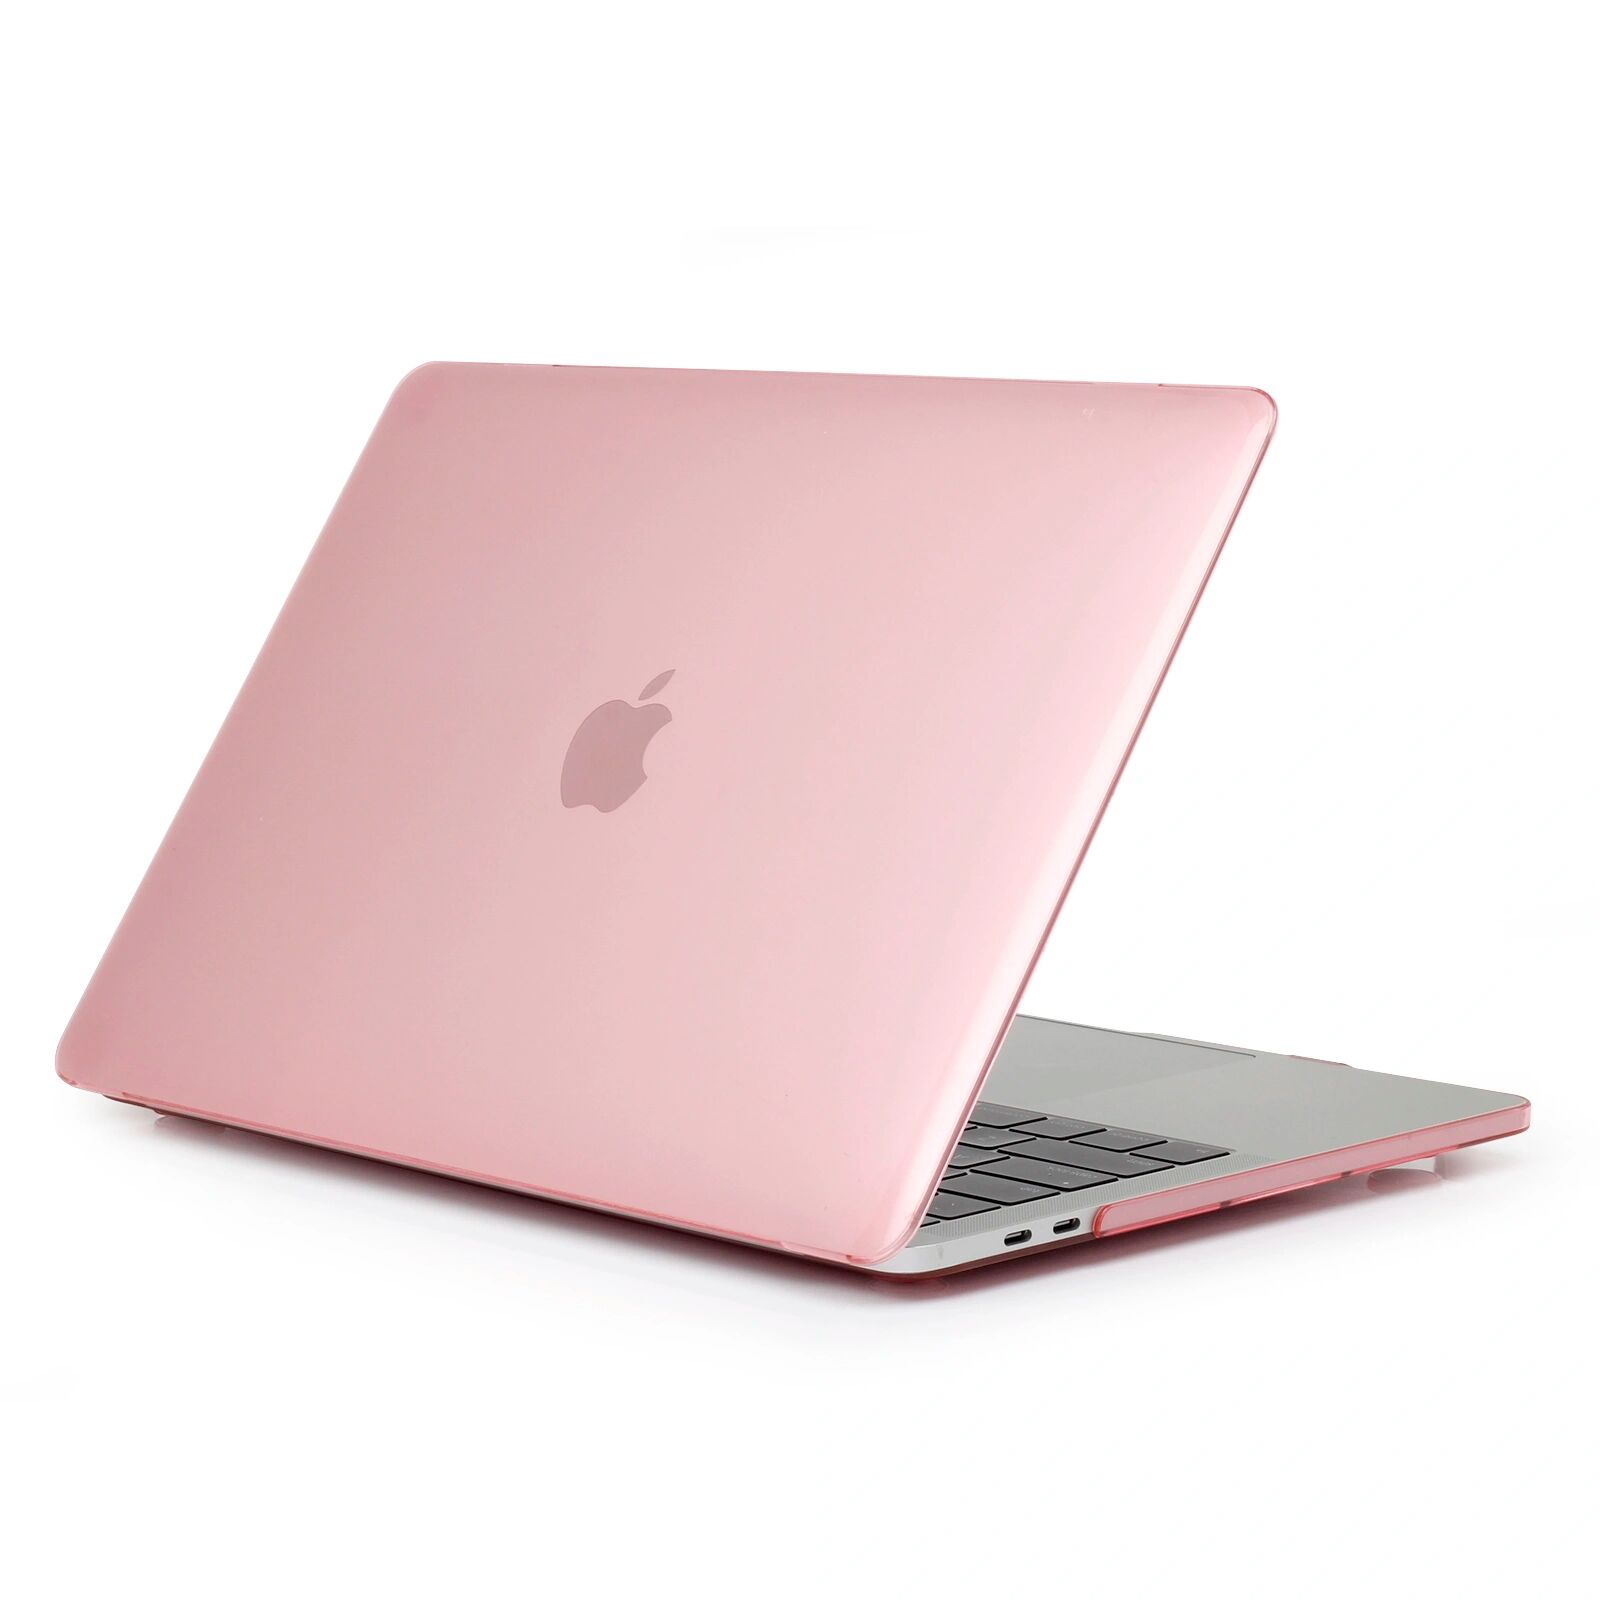 iPouzdro.cz Ochranný kryt na MacBook Pro 15 (2016-2019) - Crystal Pink